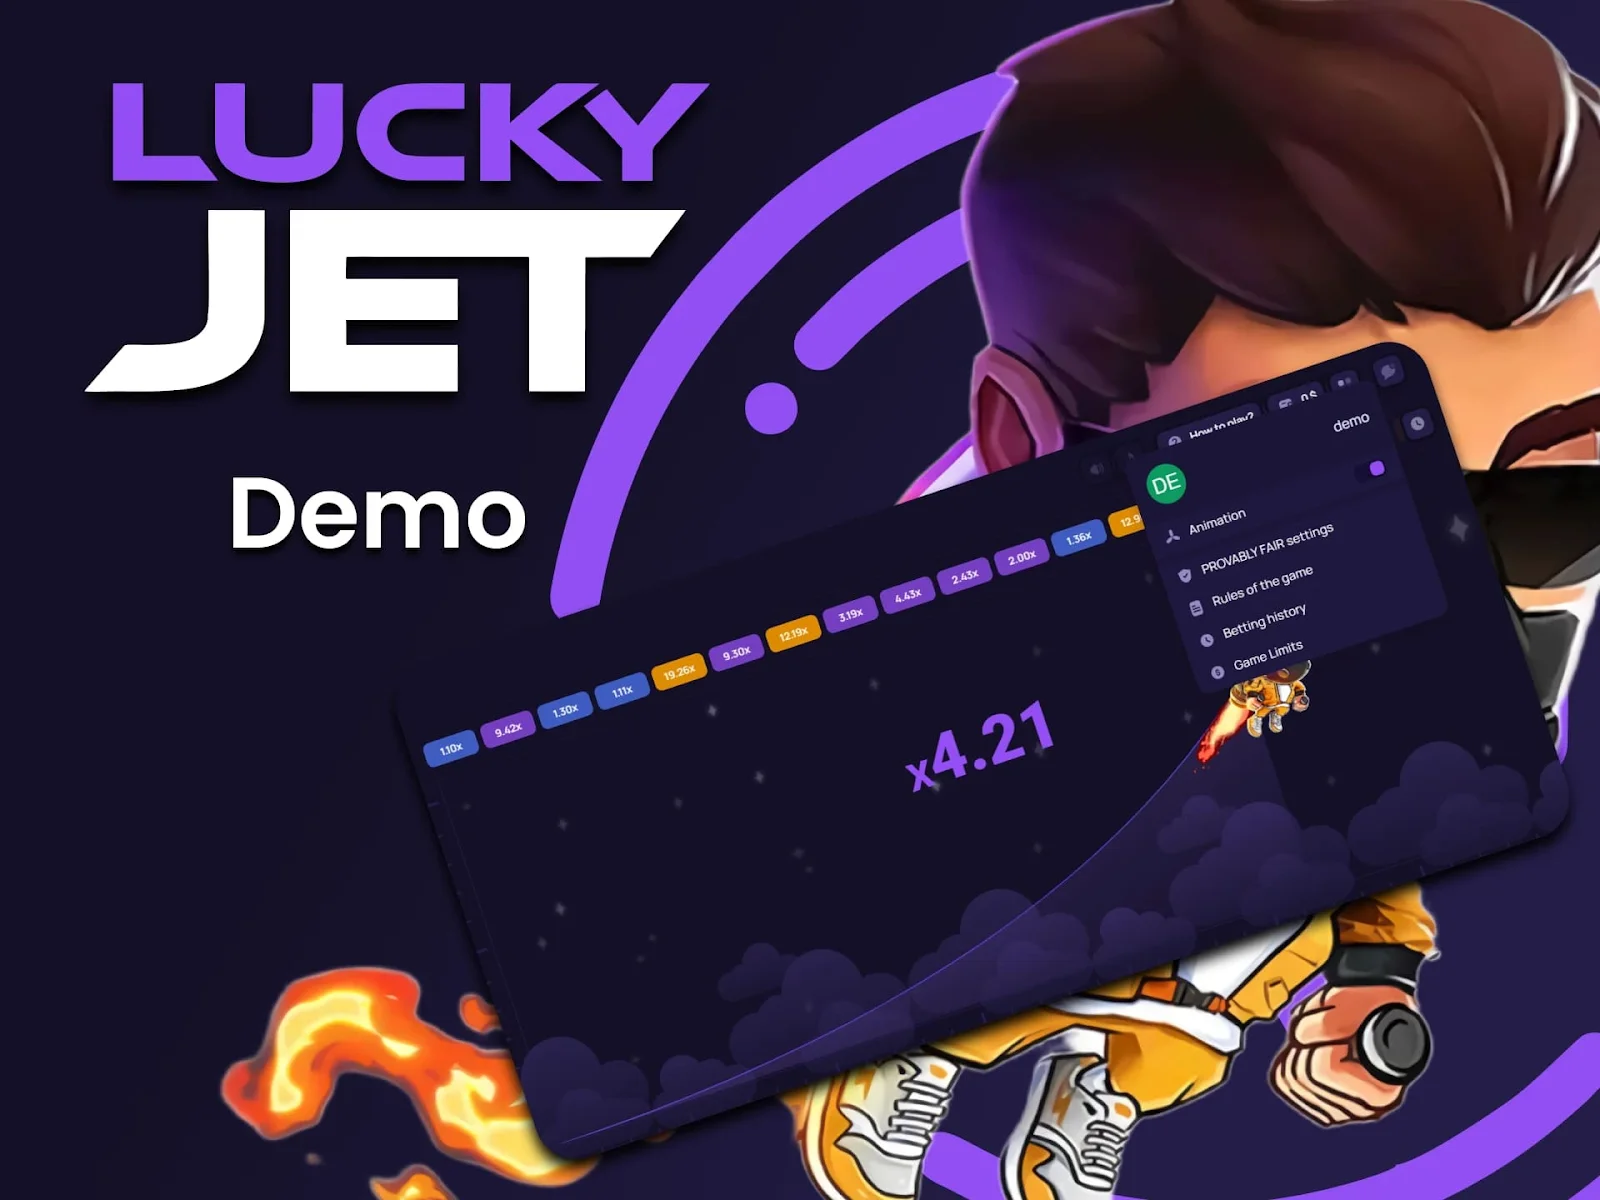 Lucky Jet demo